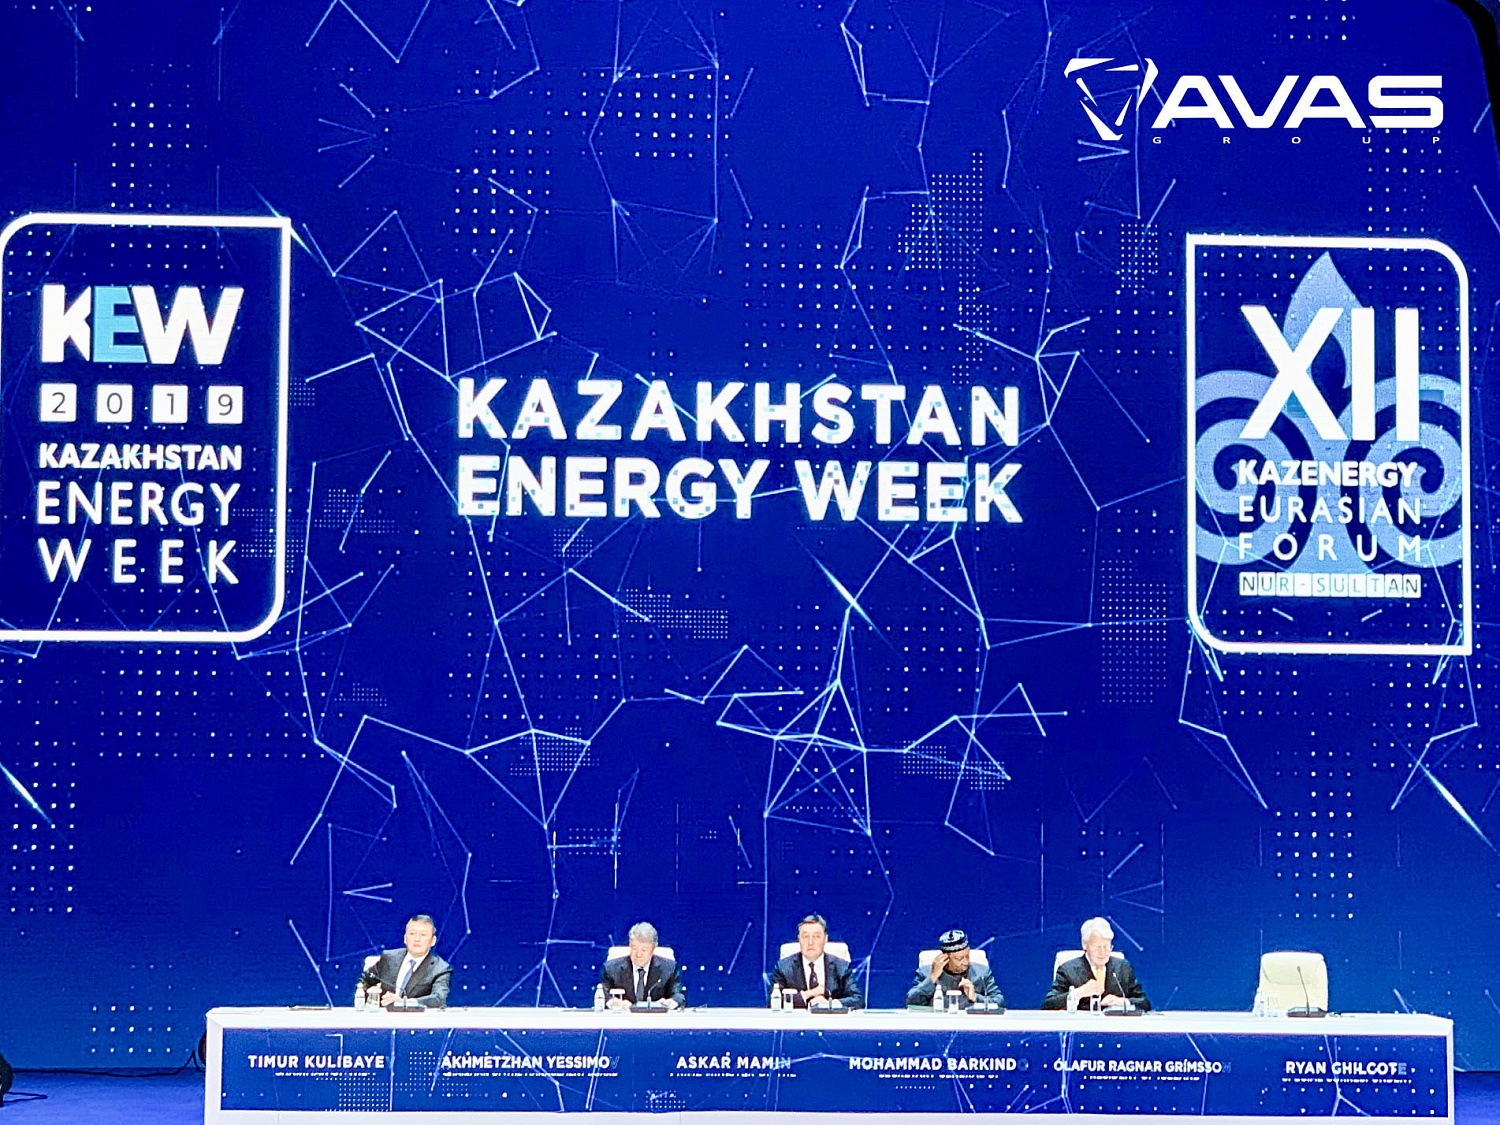 KAZAKHSTAN ENERGY WEEK